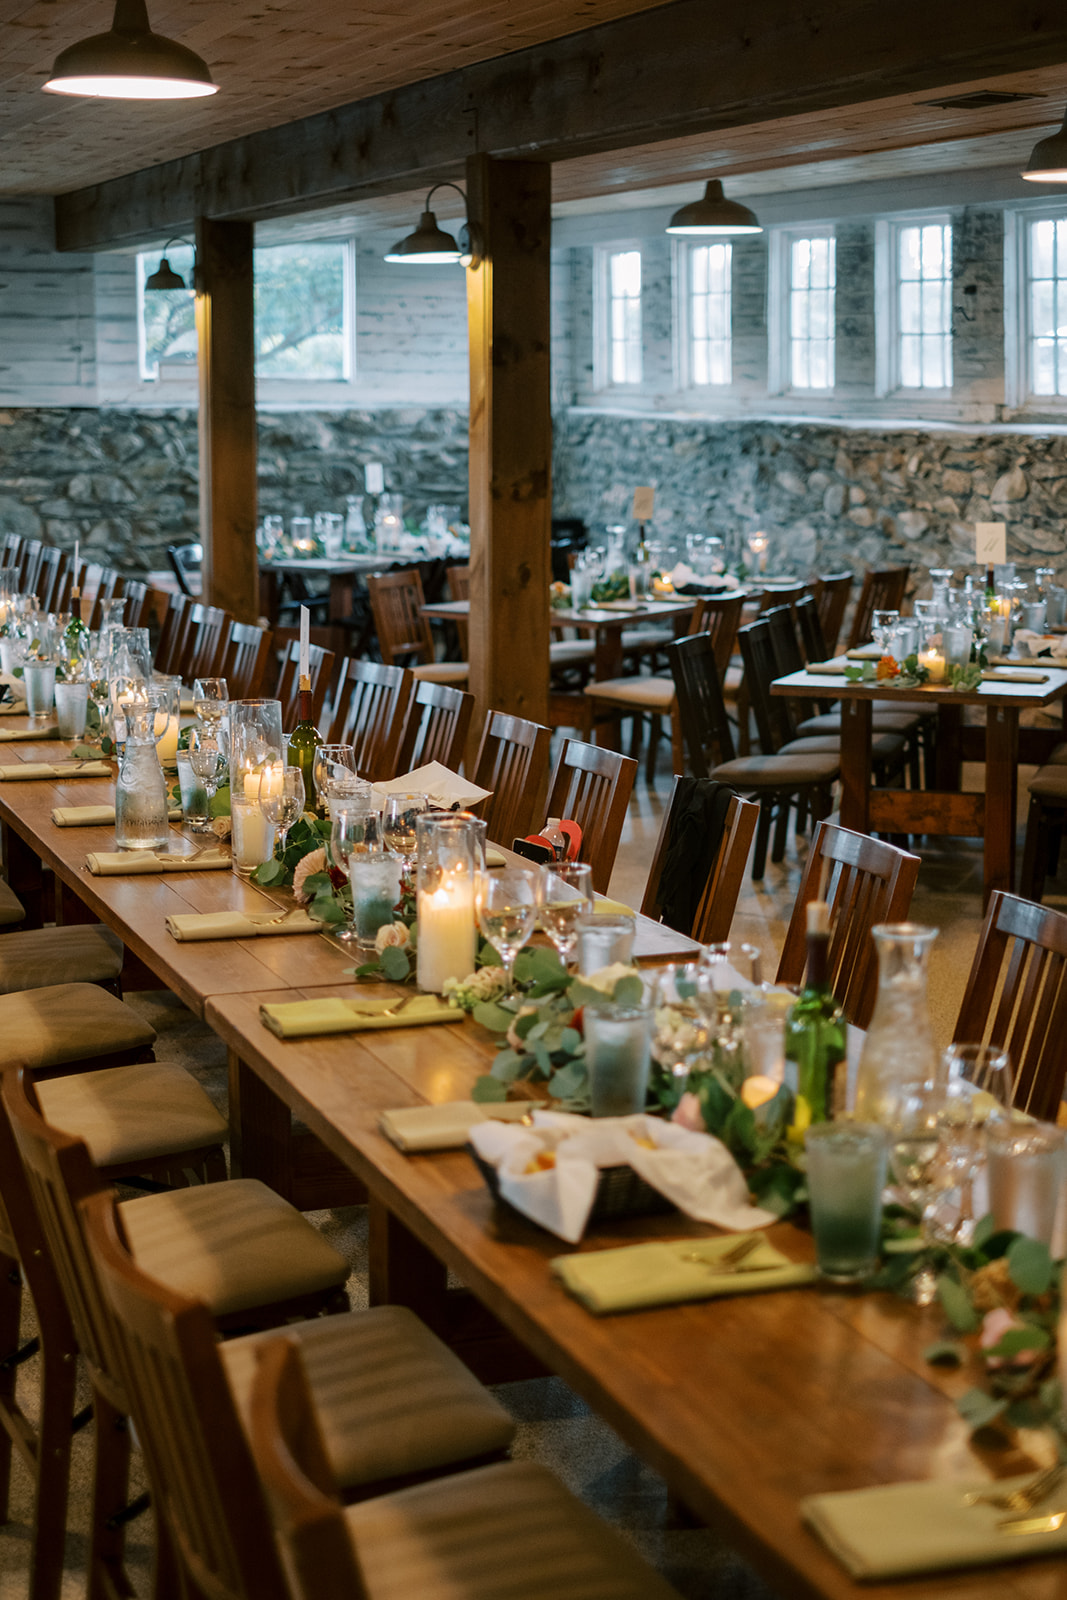 Reception details at the Barns at Hamilton Station Vineyards wedding venue